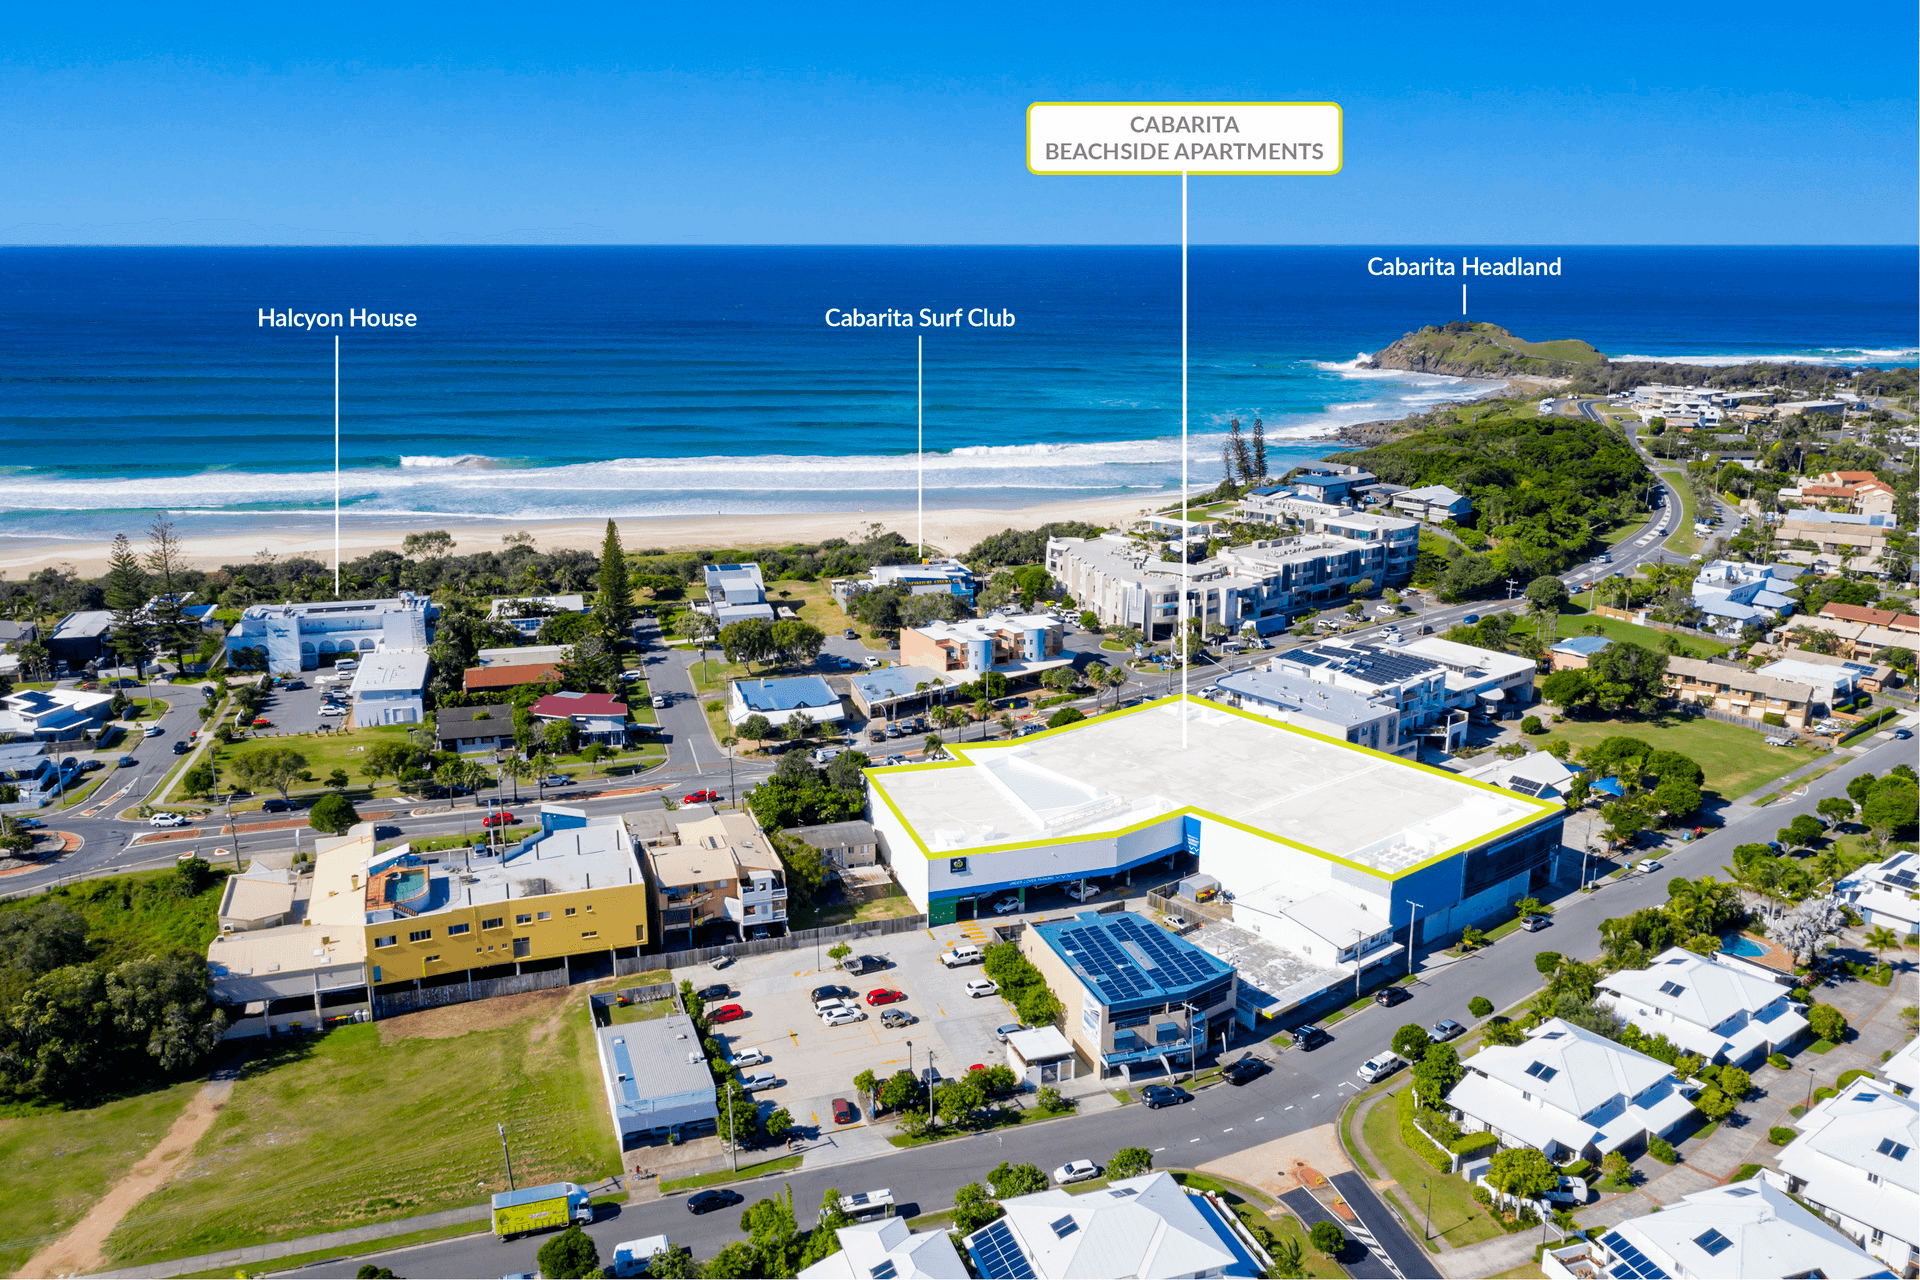 39-45 Tweed Coast Road - Cabarita Beachside Apartments, Bogangar, NSW 2488